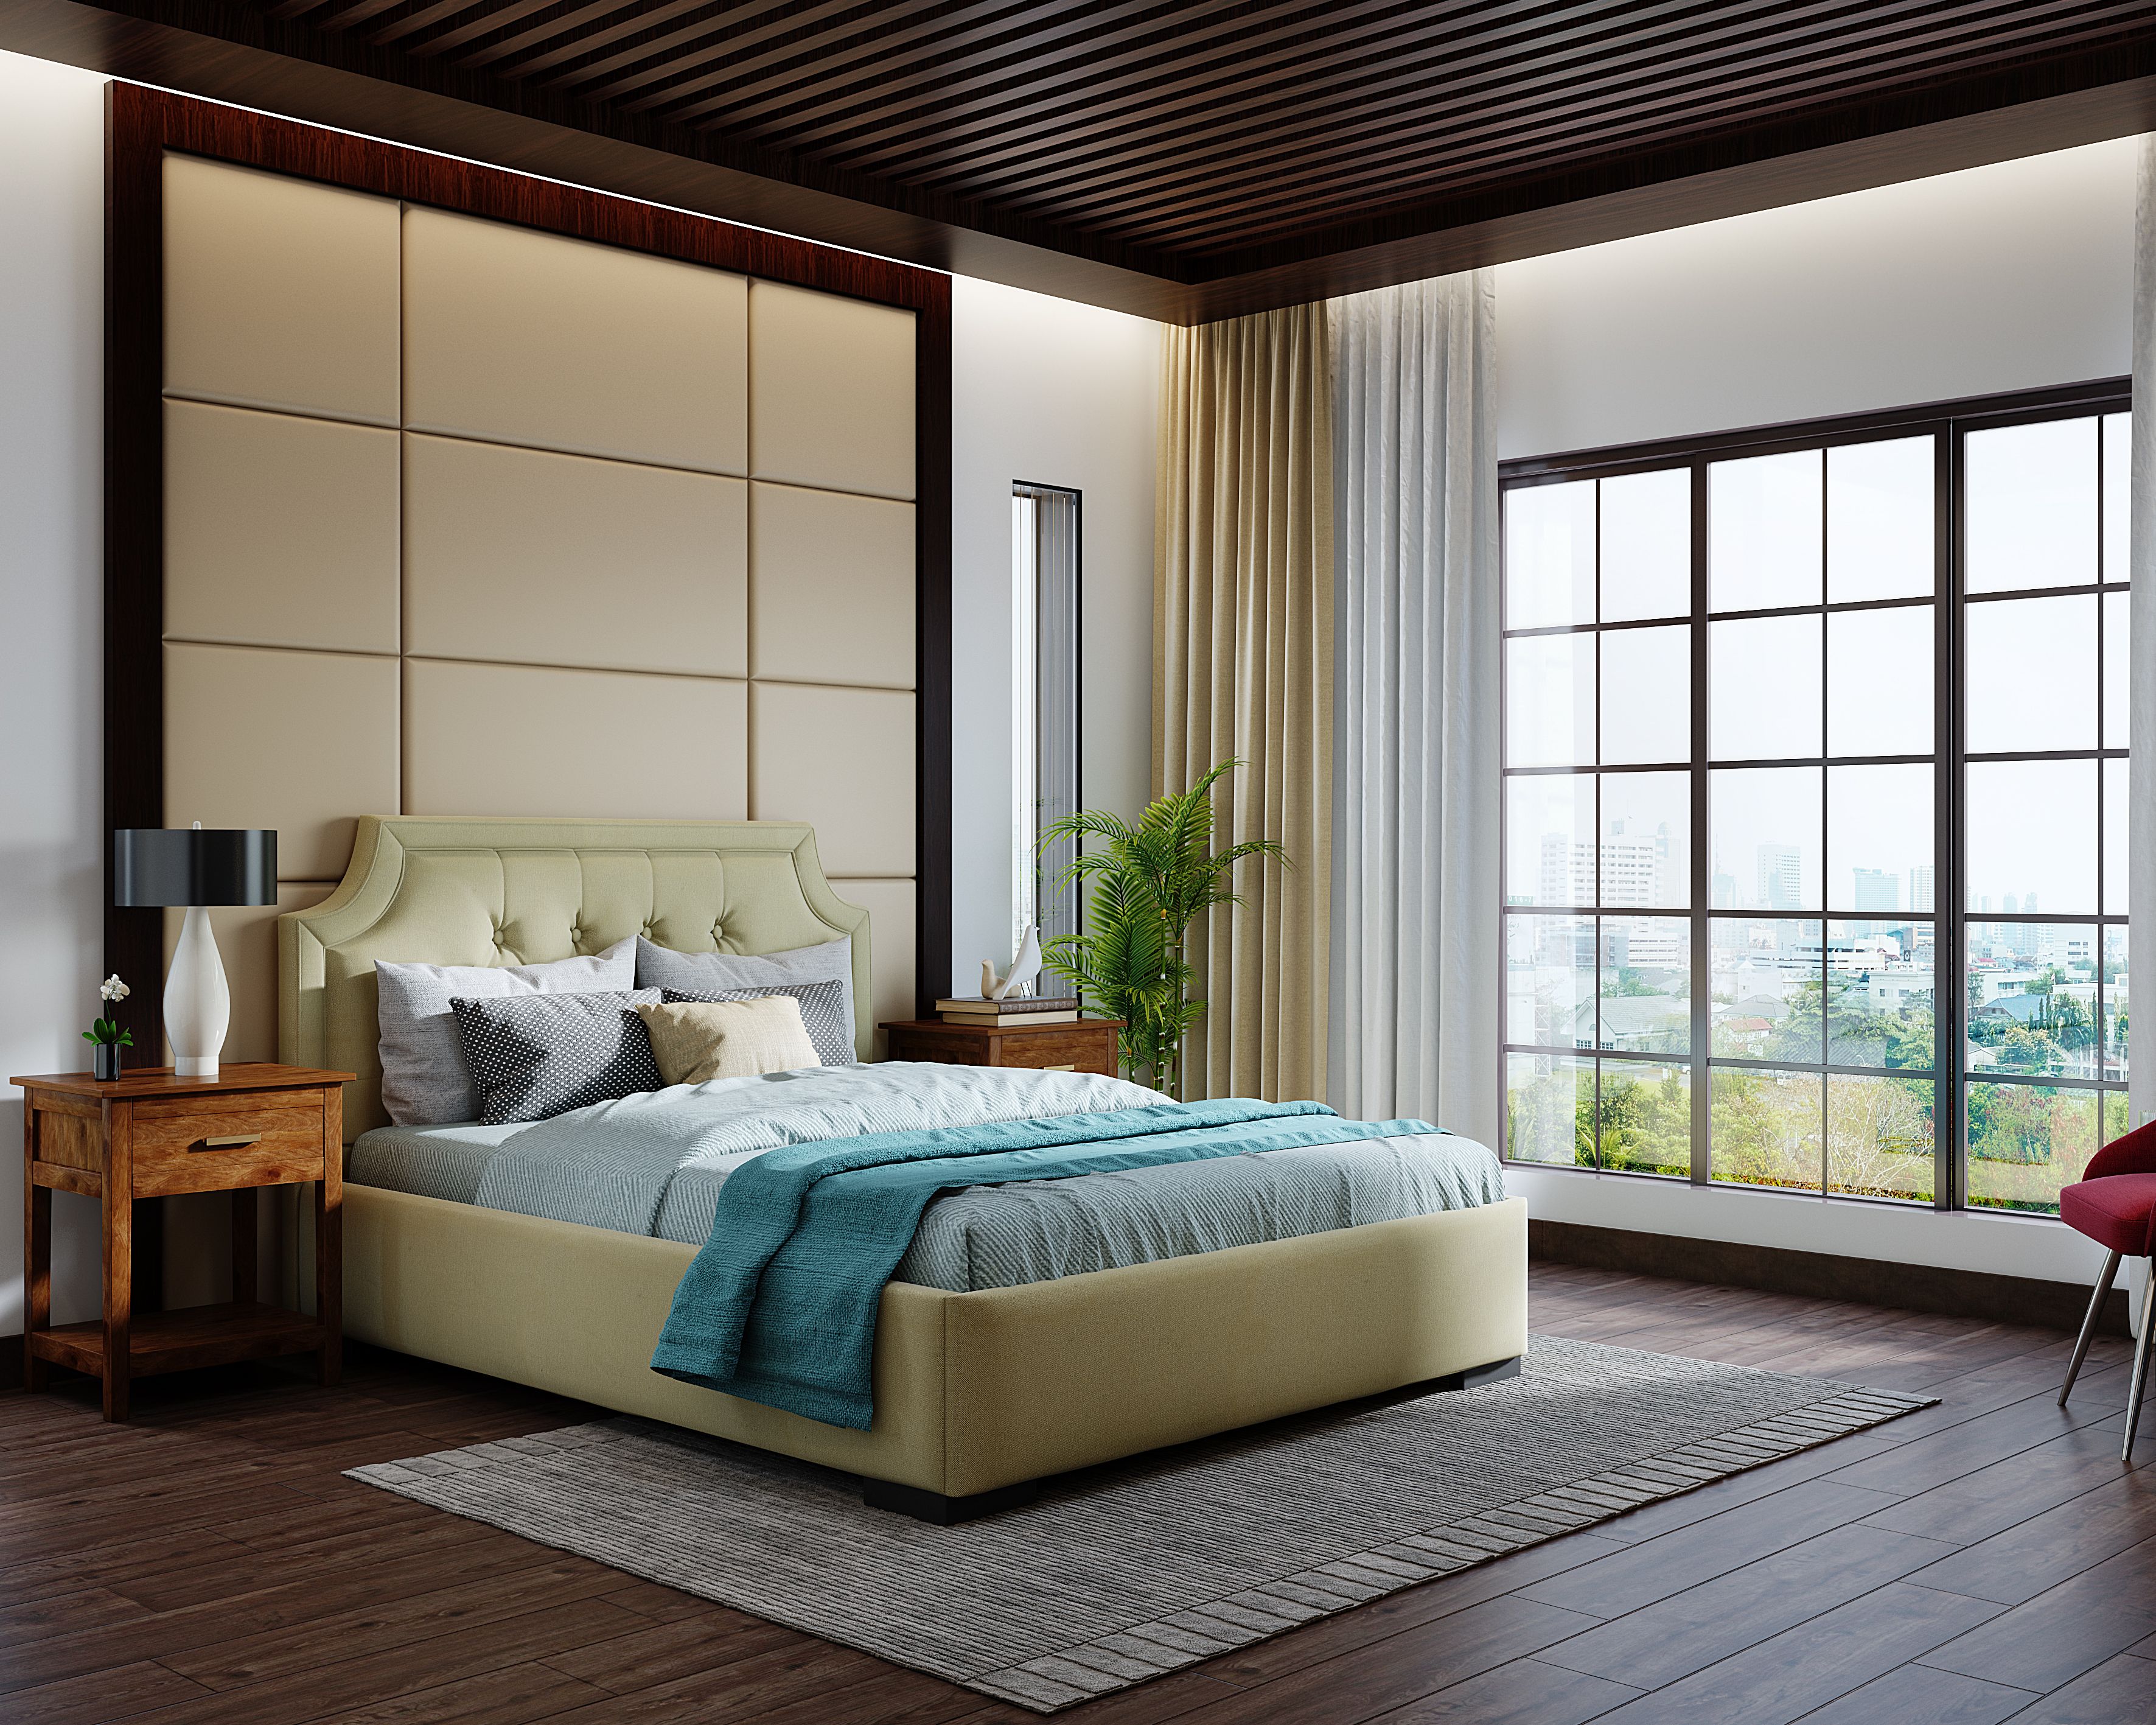 Modern Master Bedroom Design With Wooden Flooring